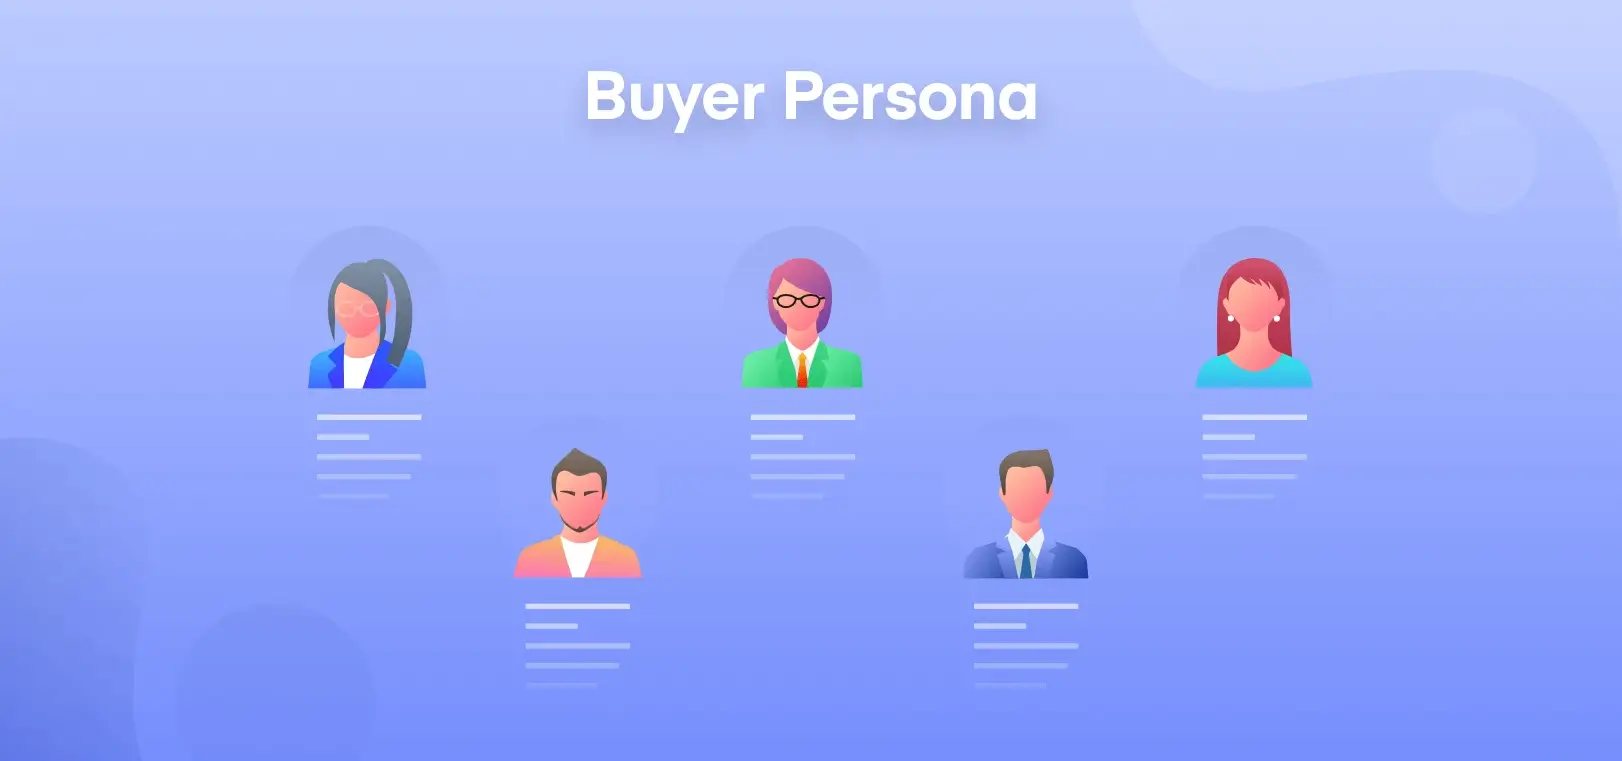 Create buyer persona